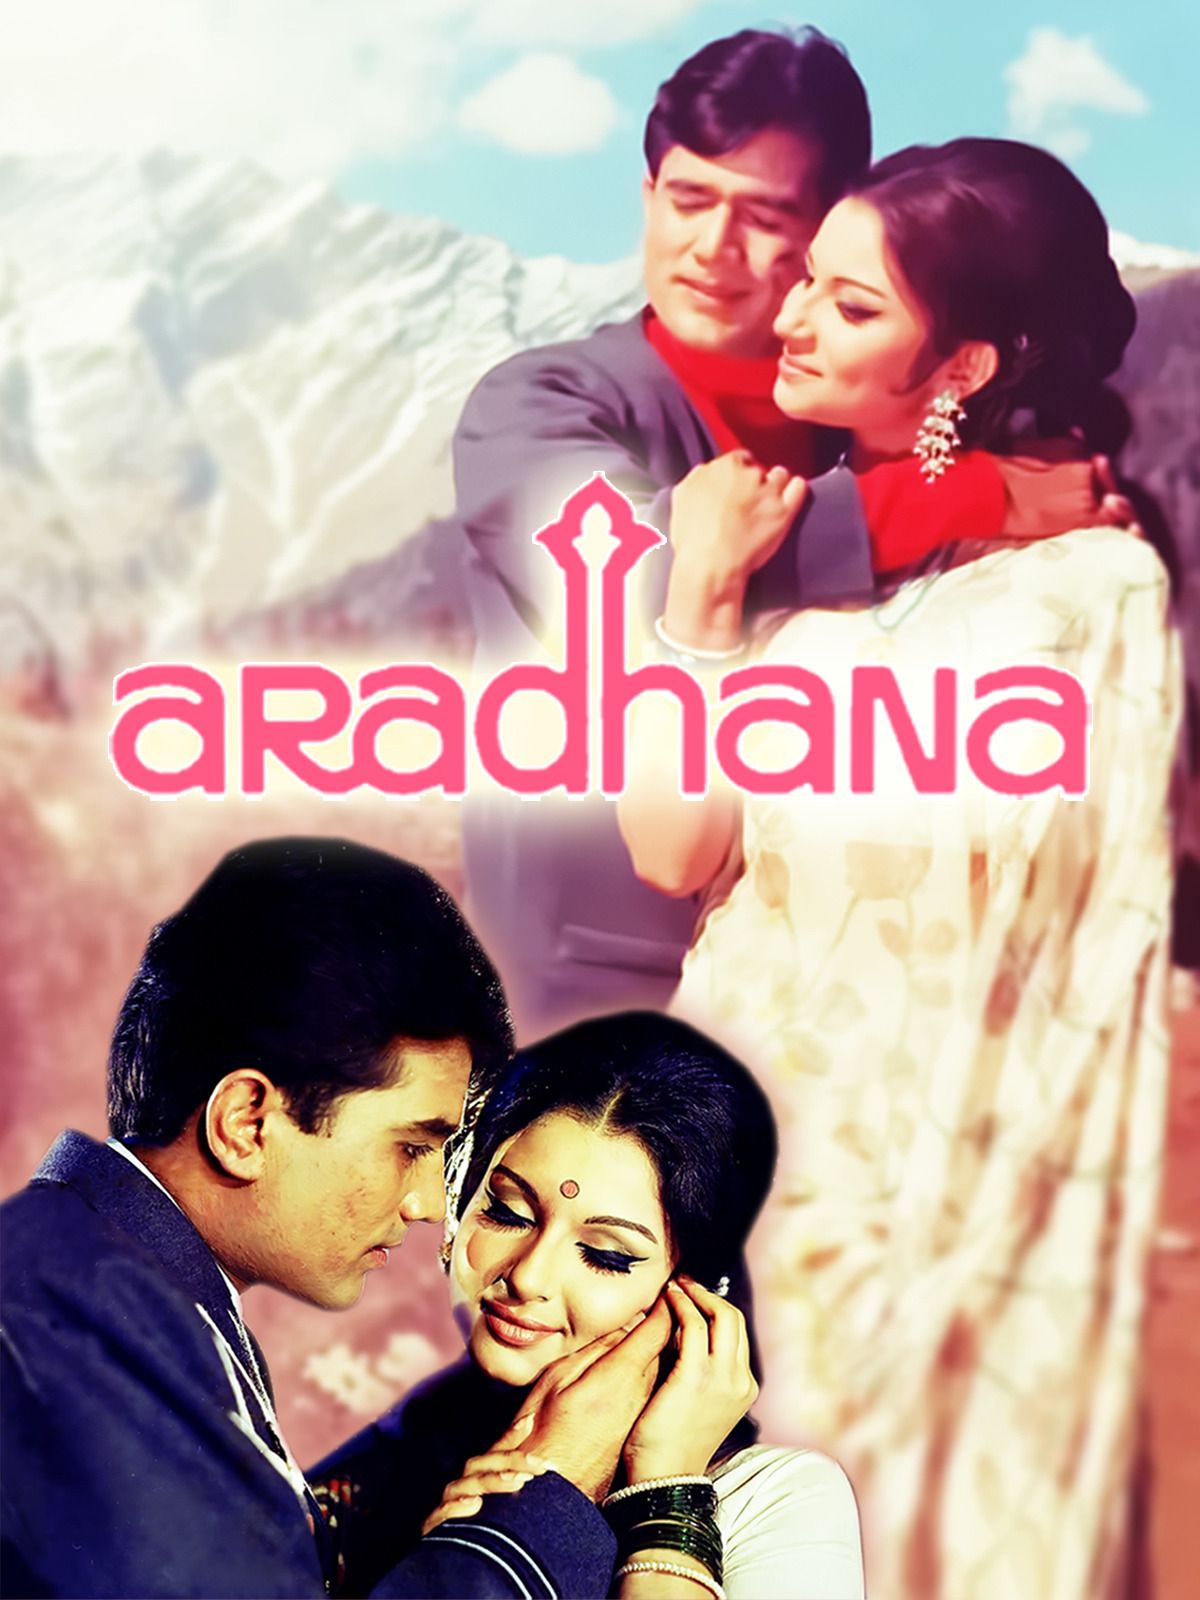 50 Years Of Aradhana: When Rajesh Khanna Was Cast As The Hero, Ashim Samanta Says Friends Thought His Father, Director Shakti Samanta, Had Gone Bankrupt!